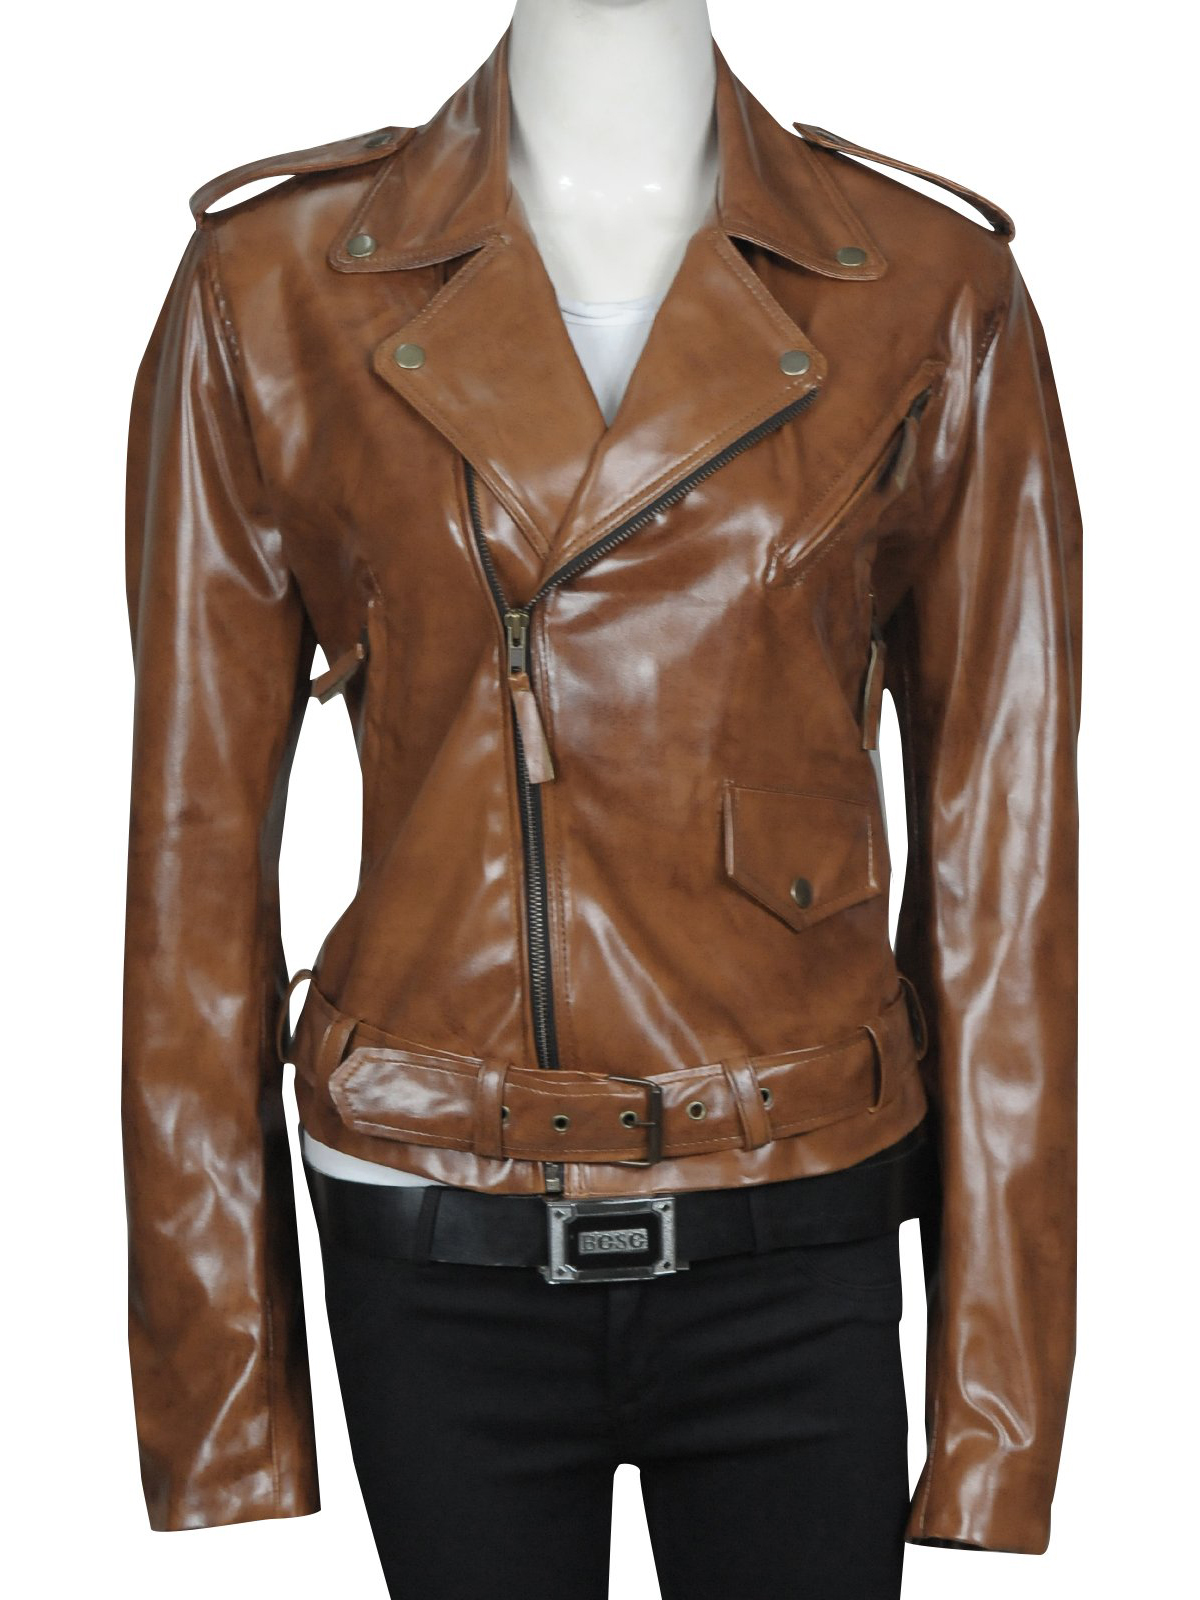 Kim Kardashian Brown Leather Jacket